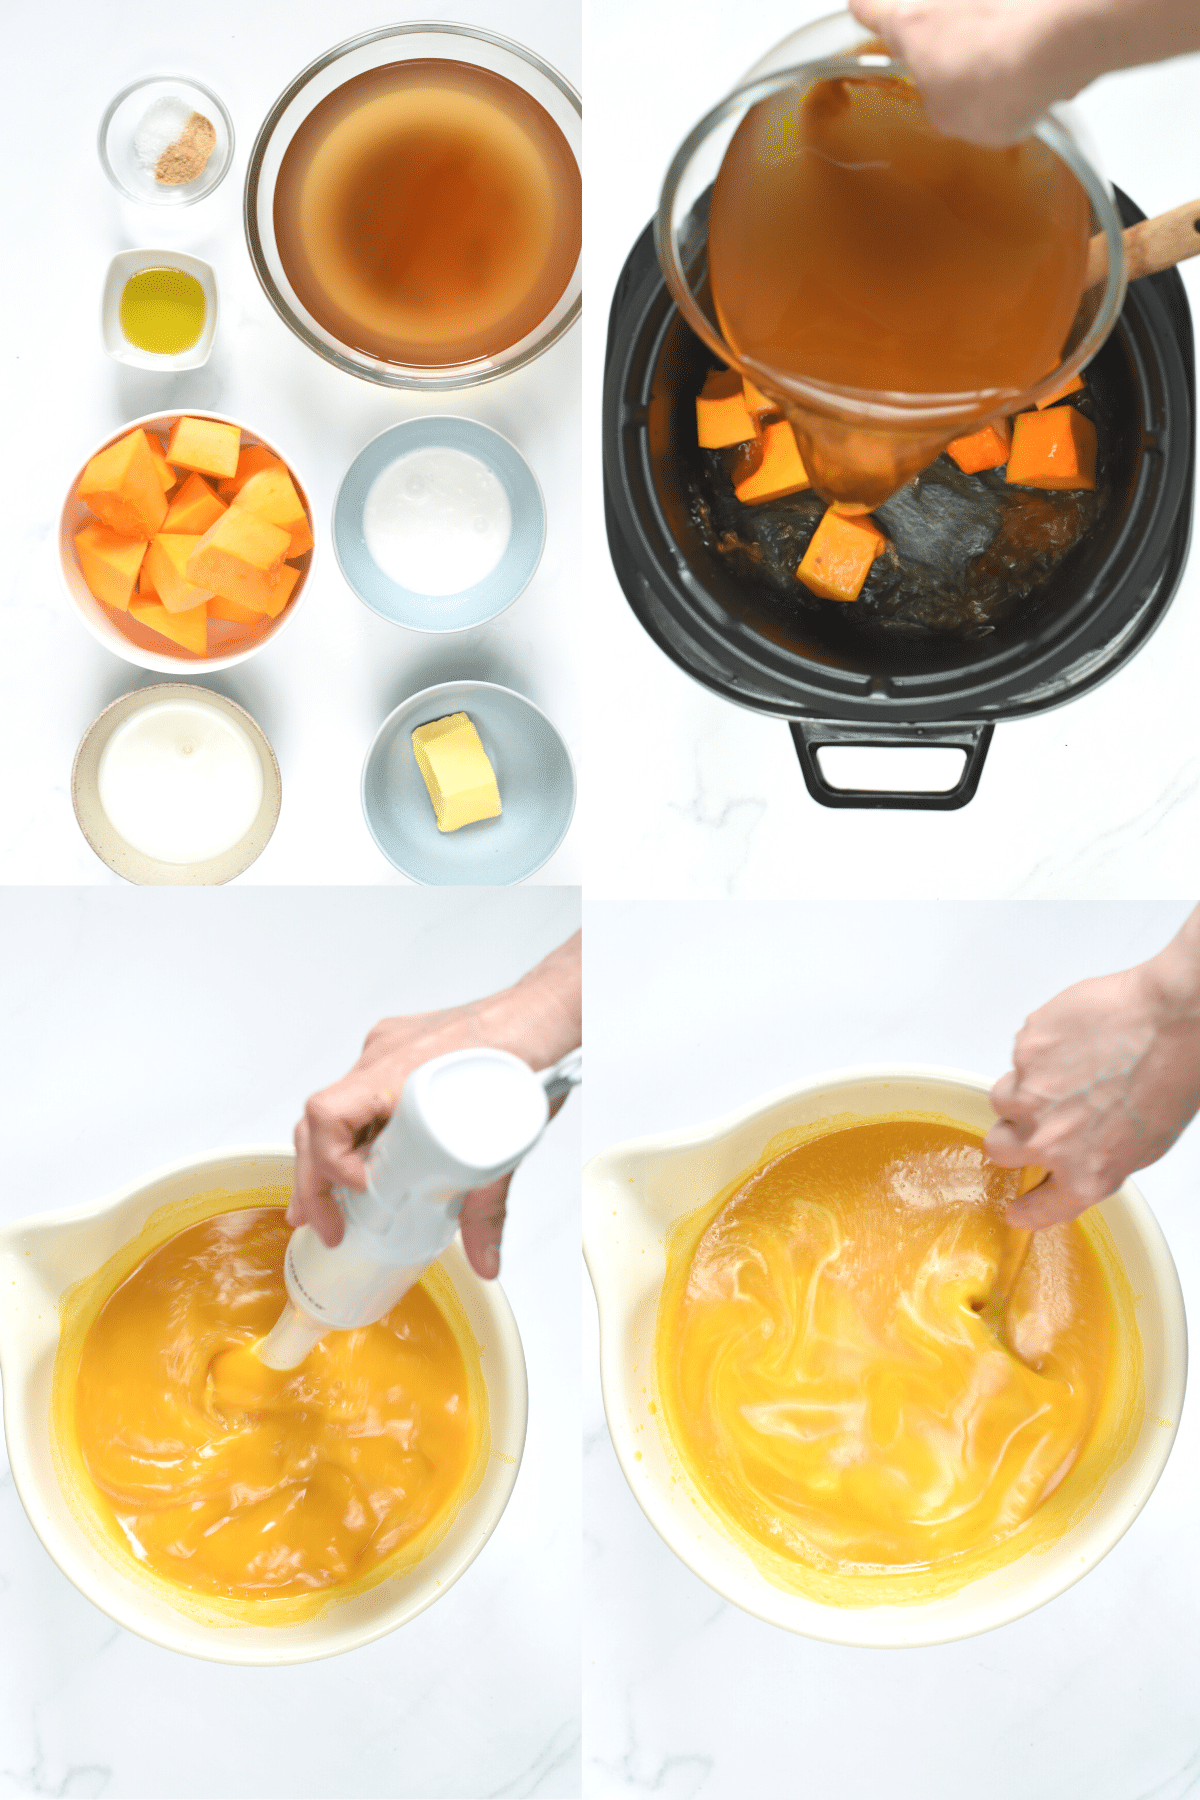 How to make Keto Pumpkin Soup